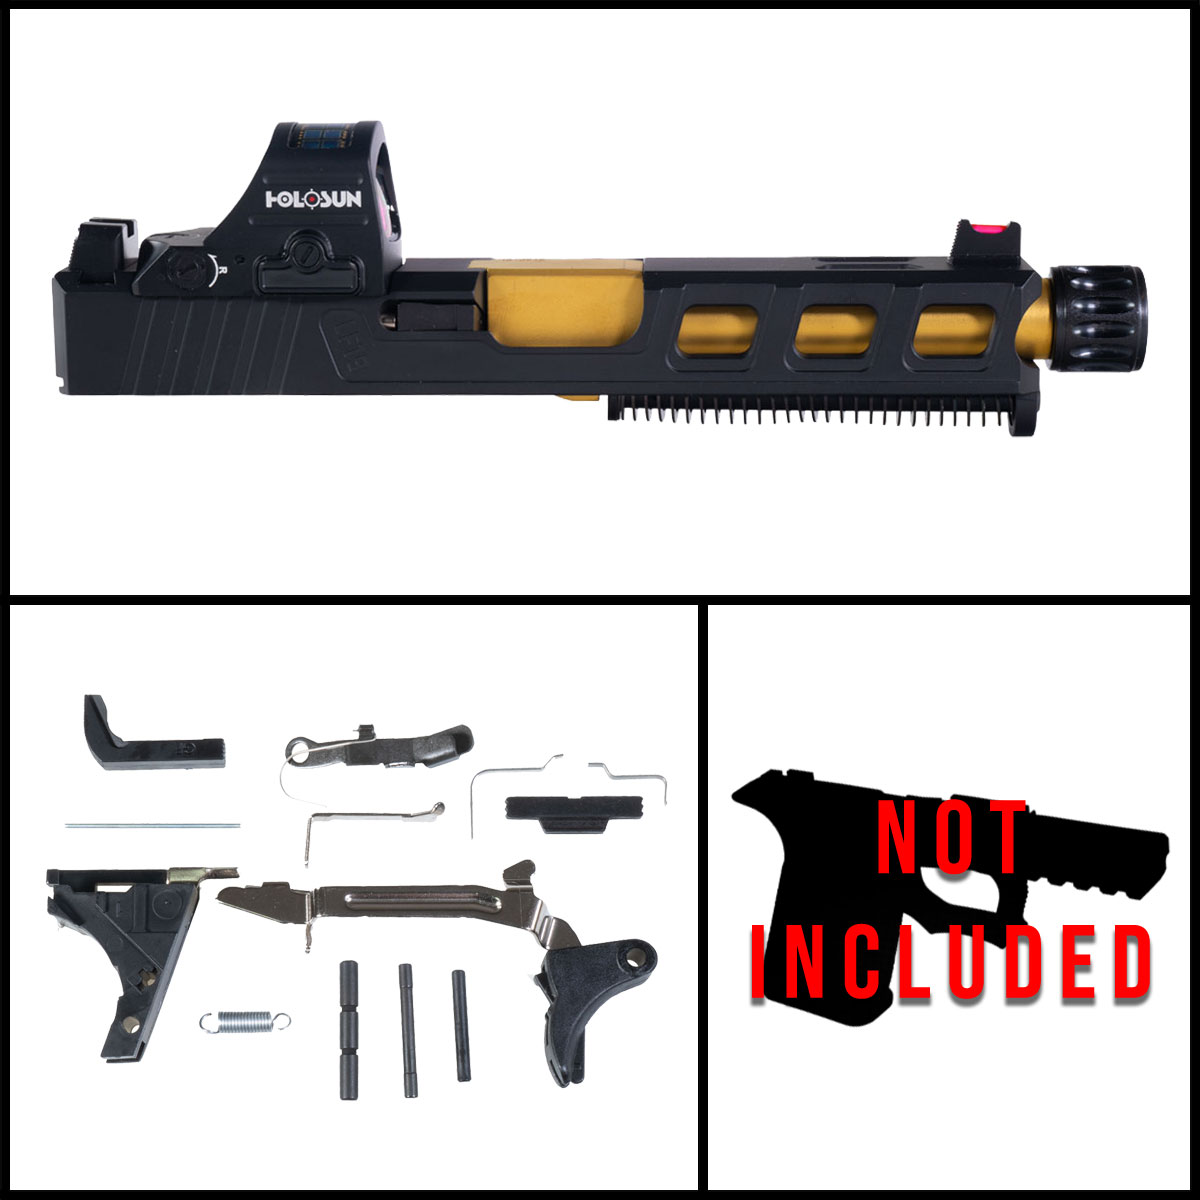 DD 'Cui Bono? w/ HS507C-X2 Red Dot' 9mm Full Pistol Build Kit (Everything Minus Frame) - Glock 19 Gen 1-3 Compatible